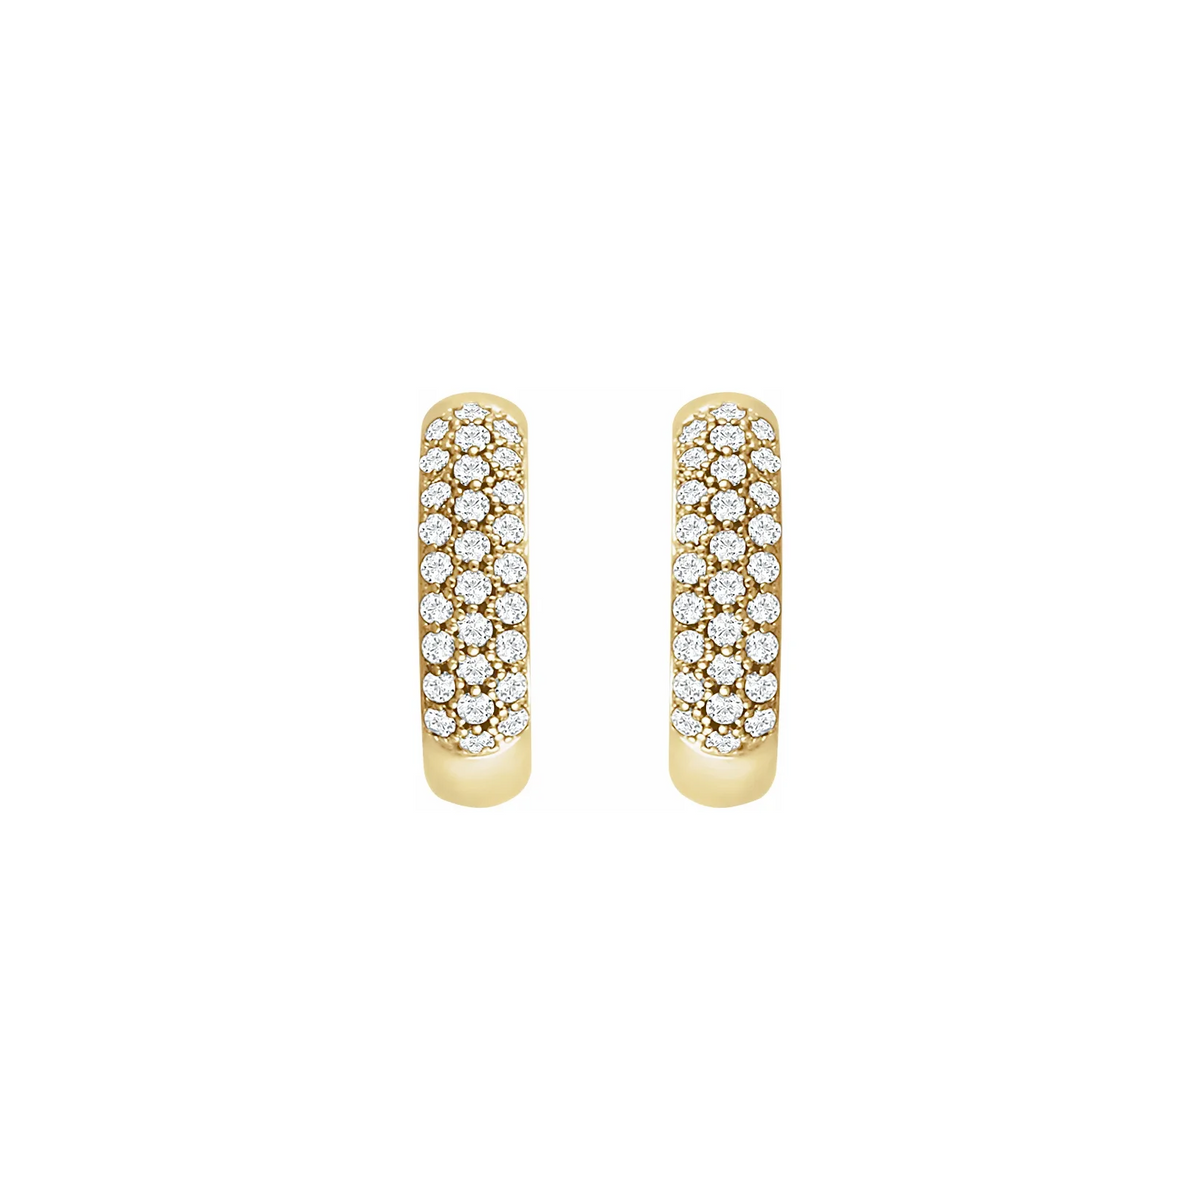 Pair of Yellow Gold Pavé-Set Diamond Hoop Earrings